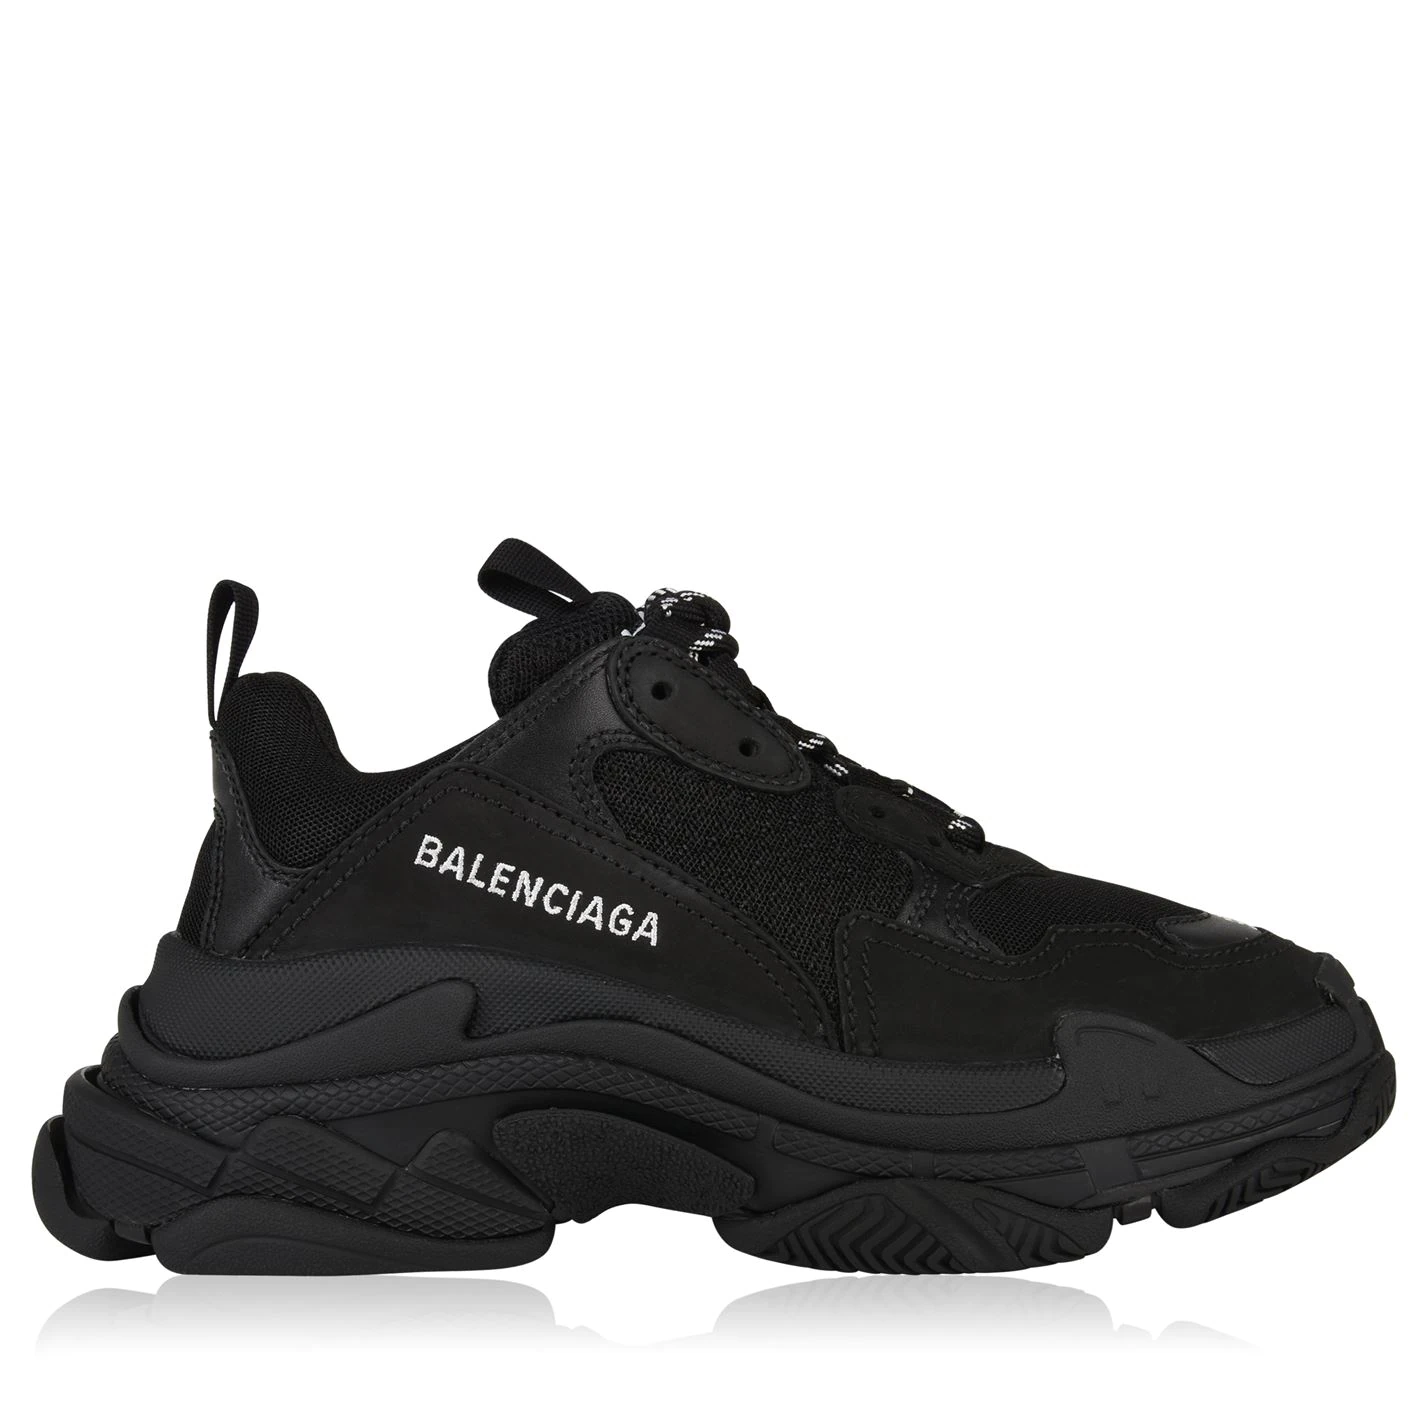 Speed high trainers Balenciaga Black size 41 EU in Plastic  32071274